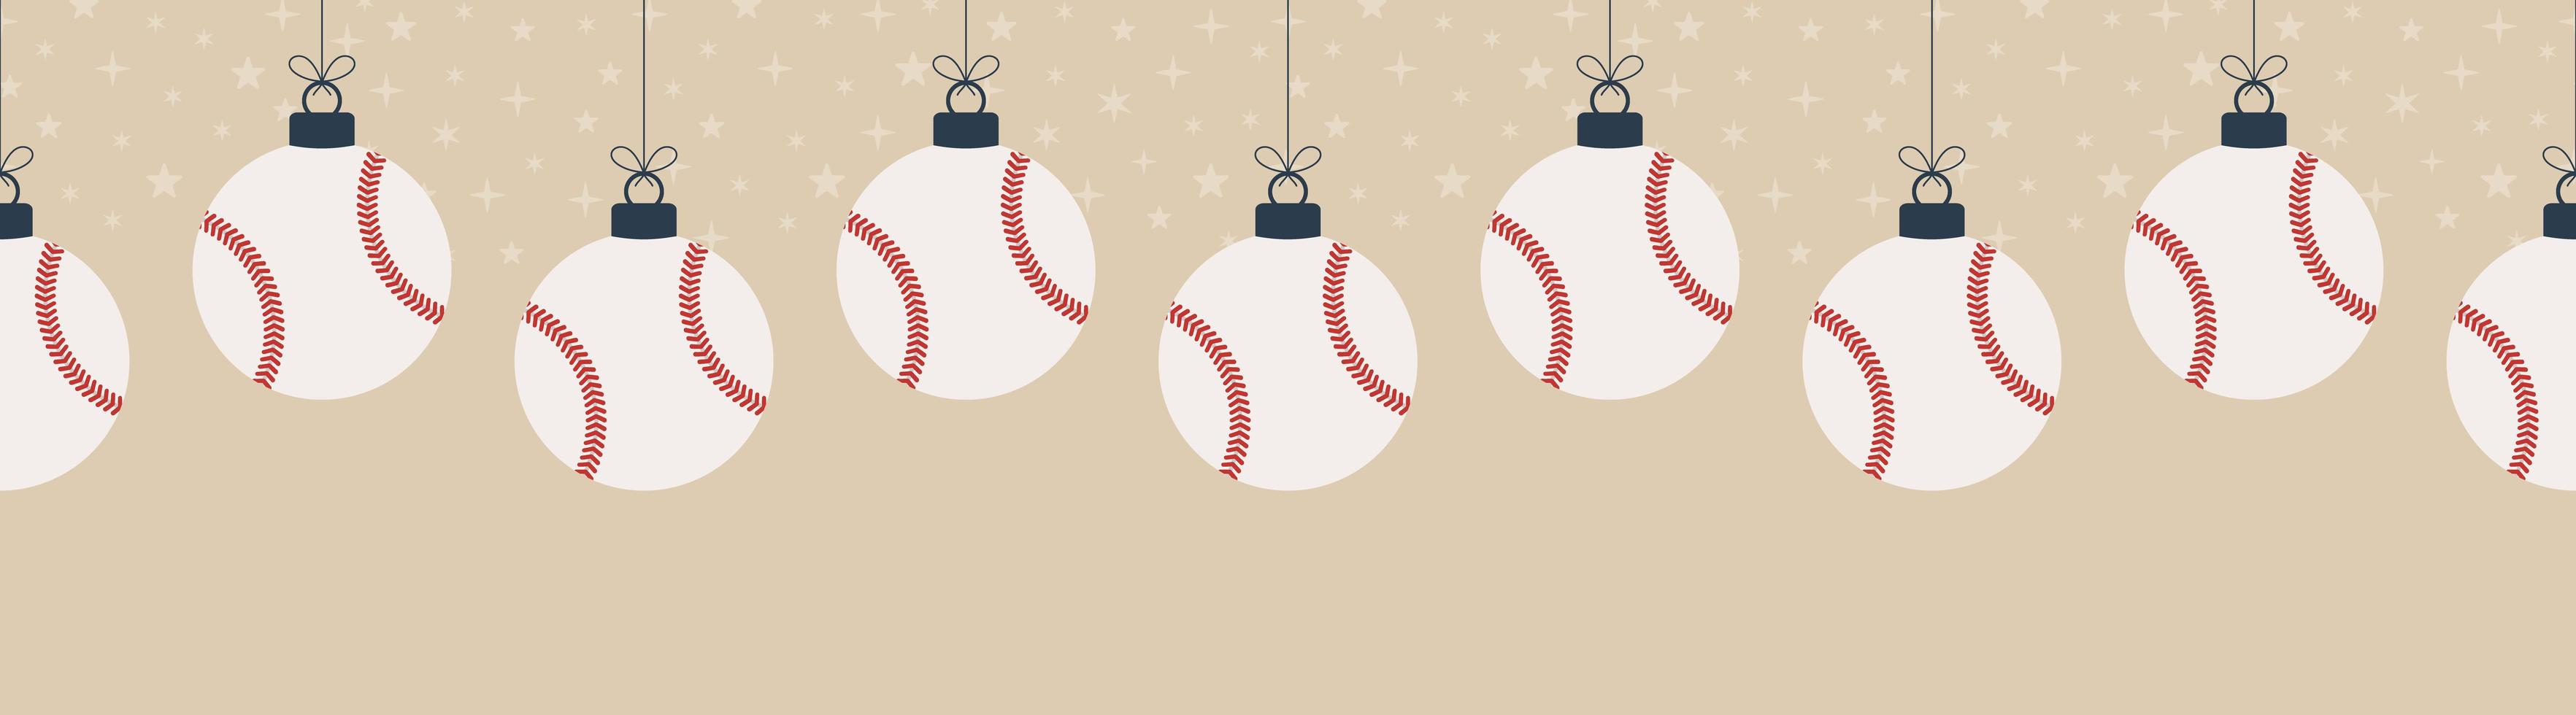 Merry Christmas baseball seamless horizontal pattern. Hang on a thread flat cartoon baseball ball as a Christmas ball on gold horizontal background. Sport Vector illustration.